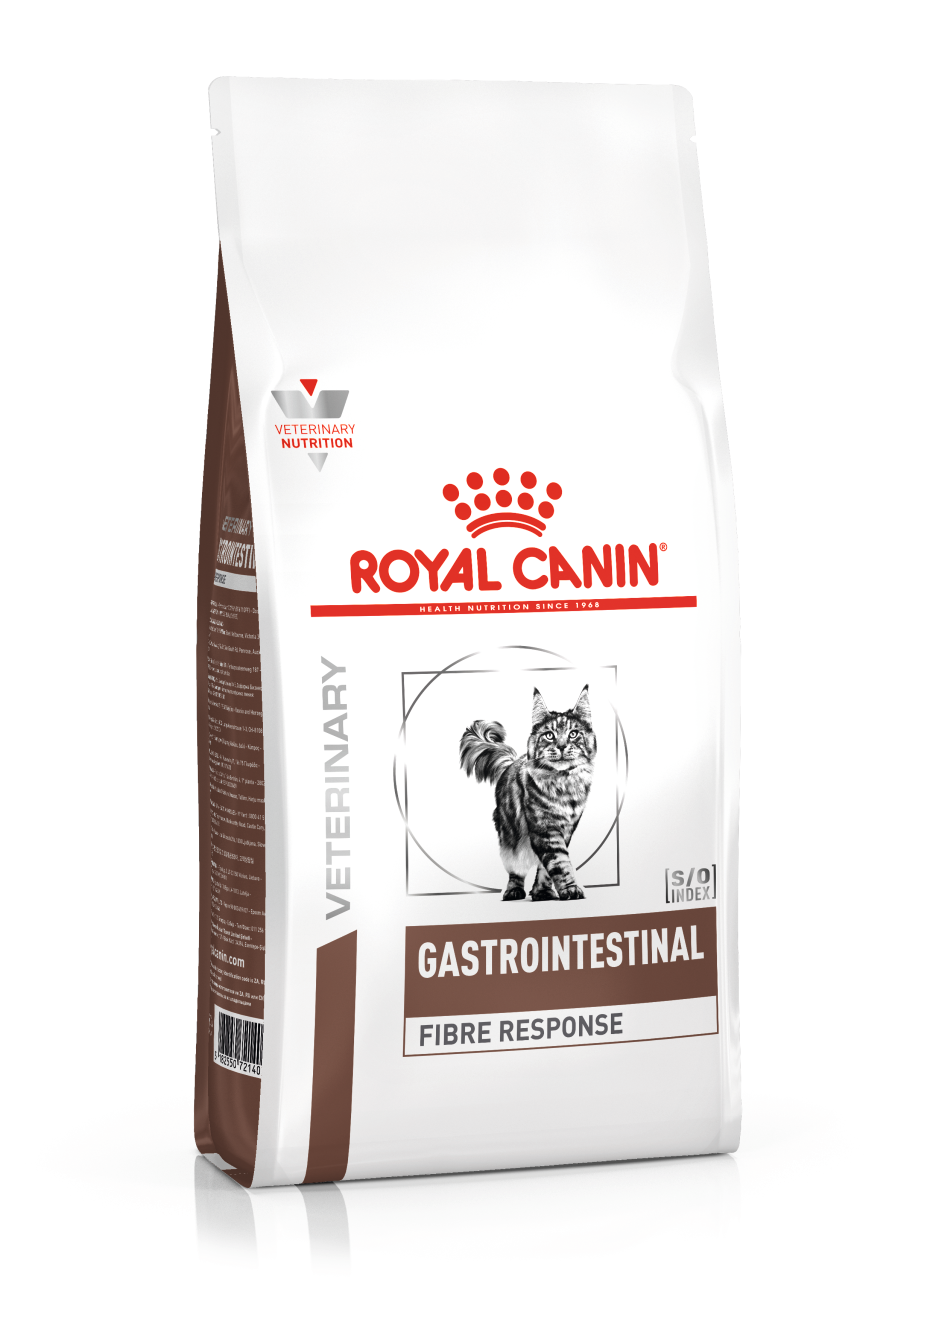 Royal Canin - Gastrointestinal Fibre Response Cat